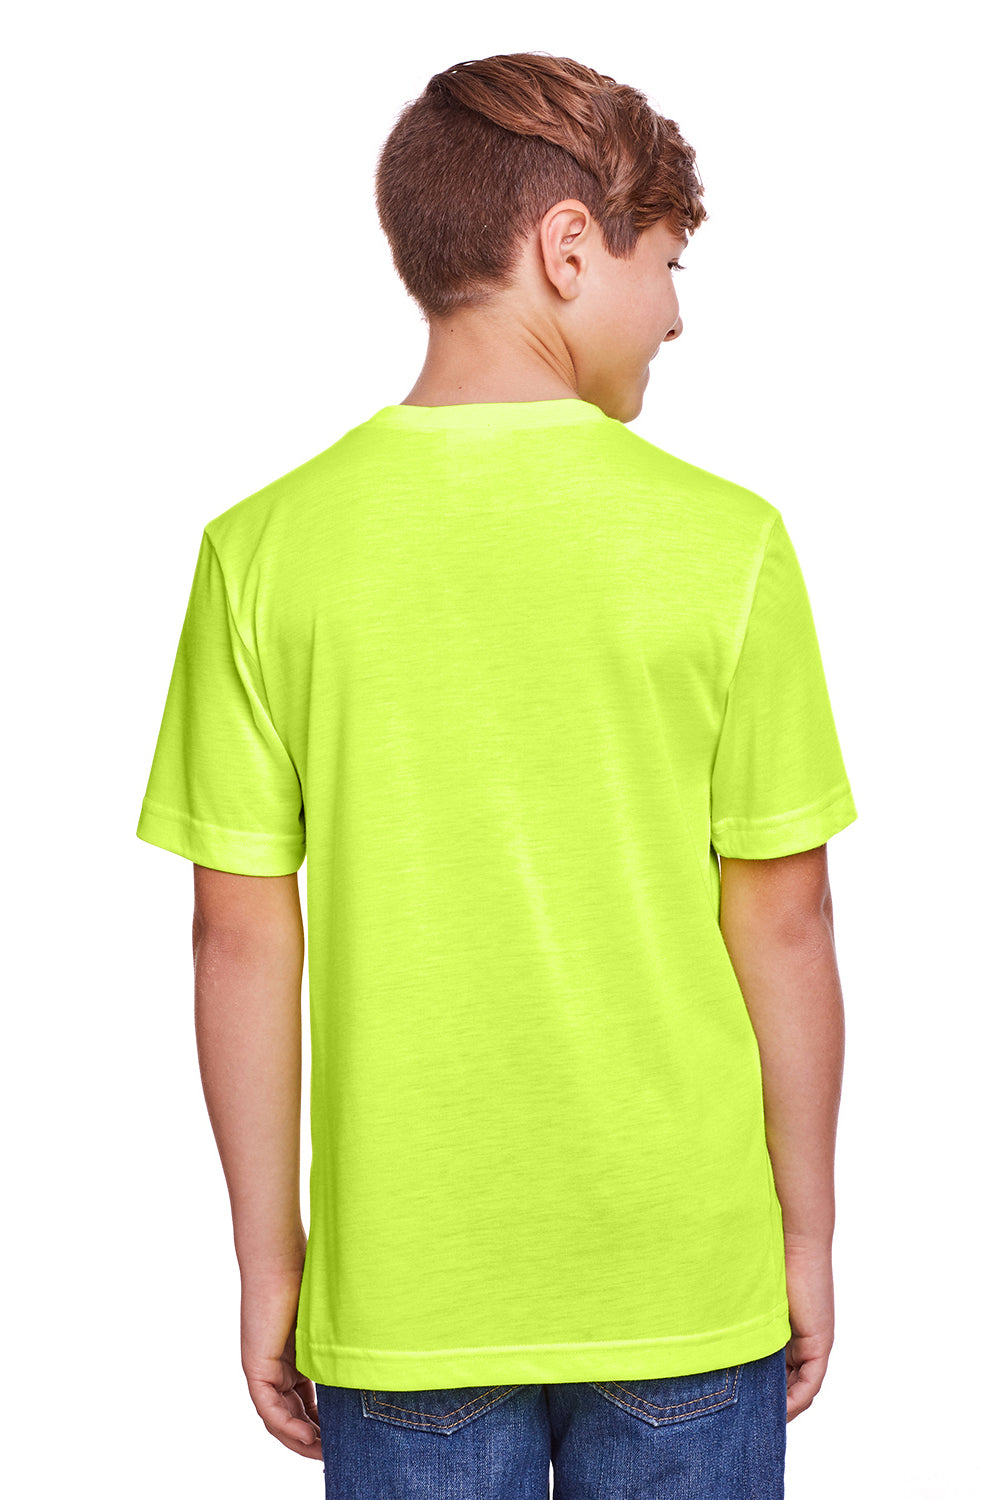 Core 365 CE111Y Youth Fusion ChromaSoft Performance Moisture Wicking Short Sleeve Crewneck T-Shirt Safety Yellow Back